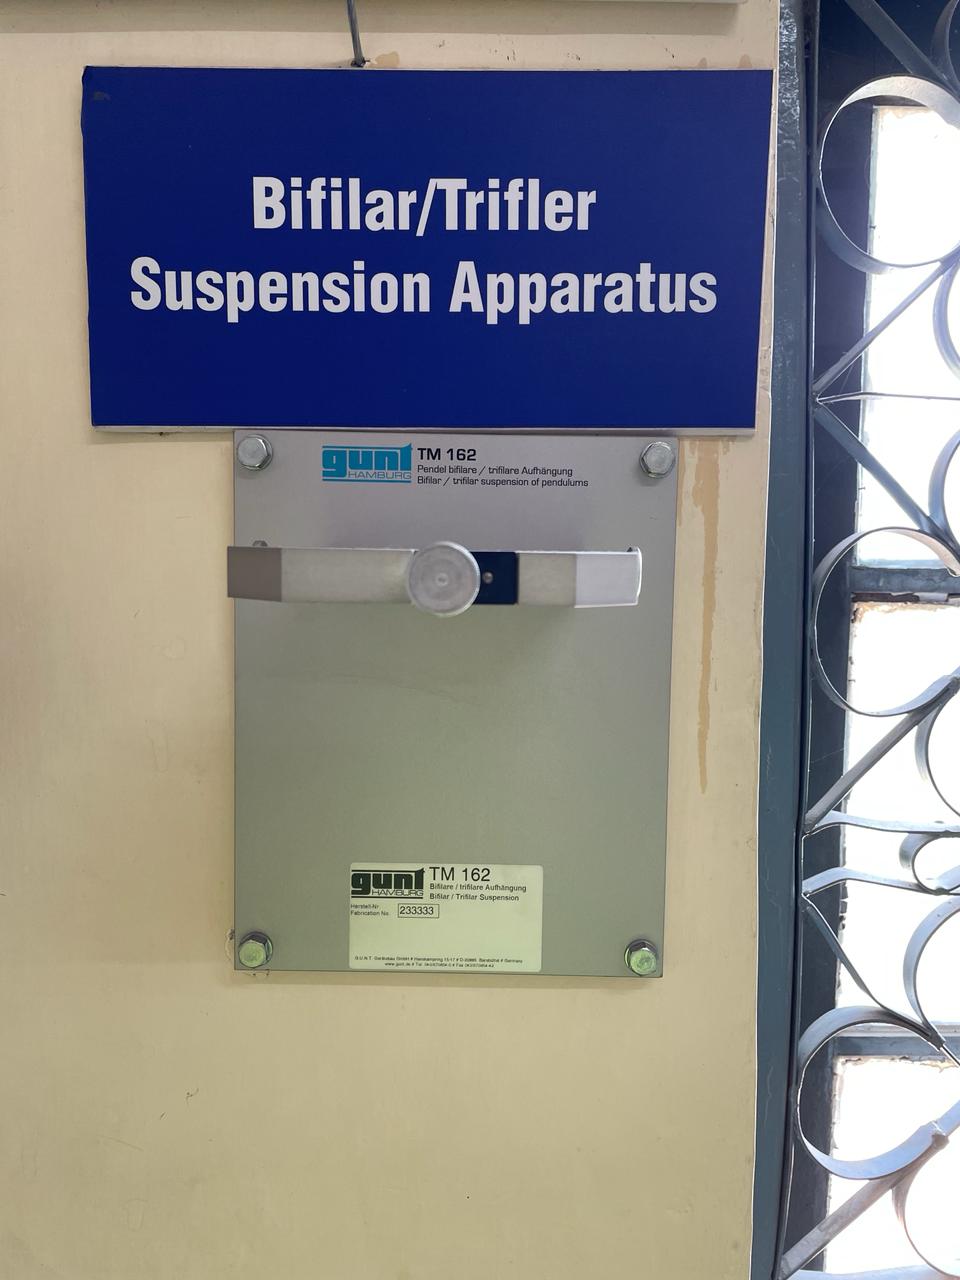 Biffeler and Triffler Suspension